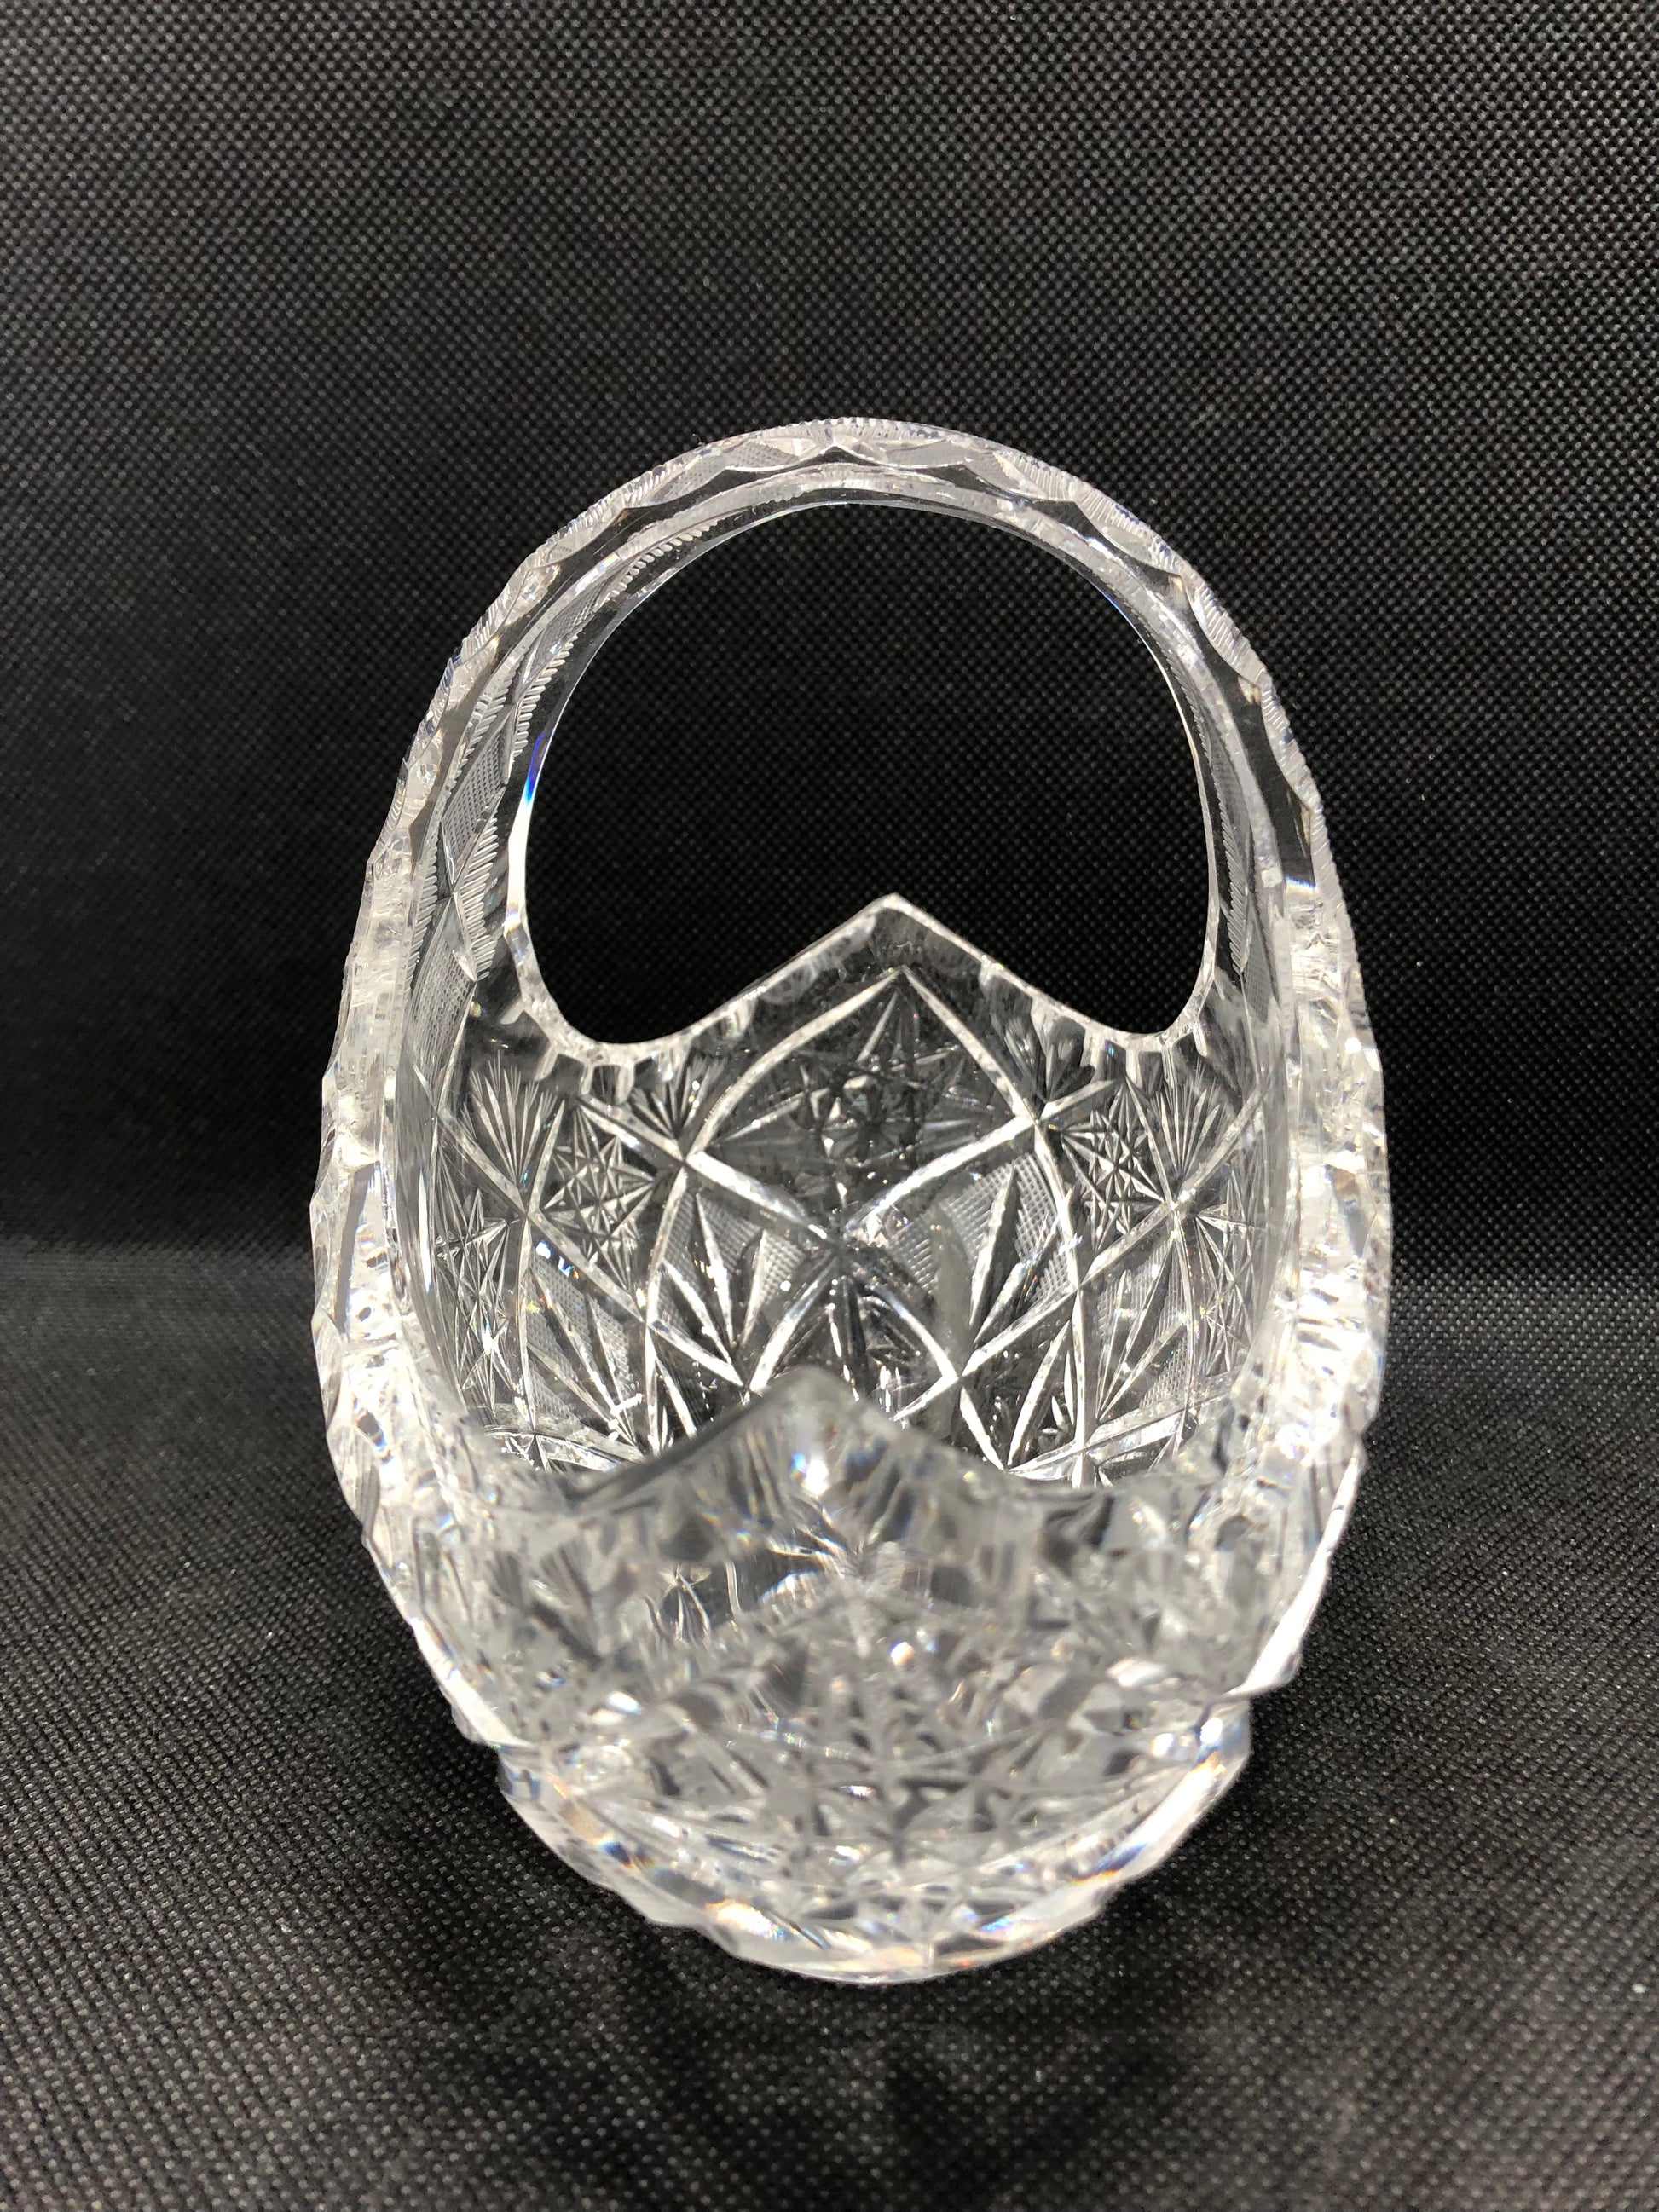 crystal vase handle design end view